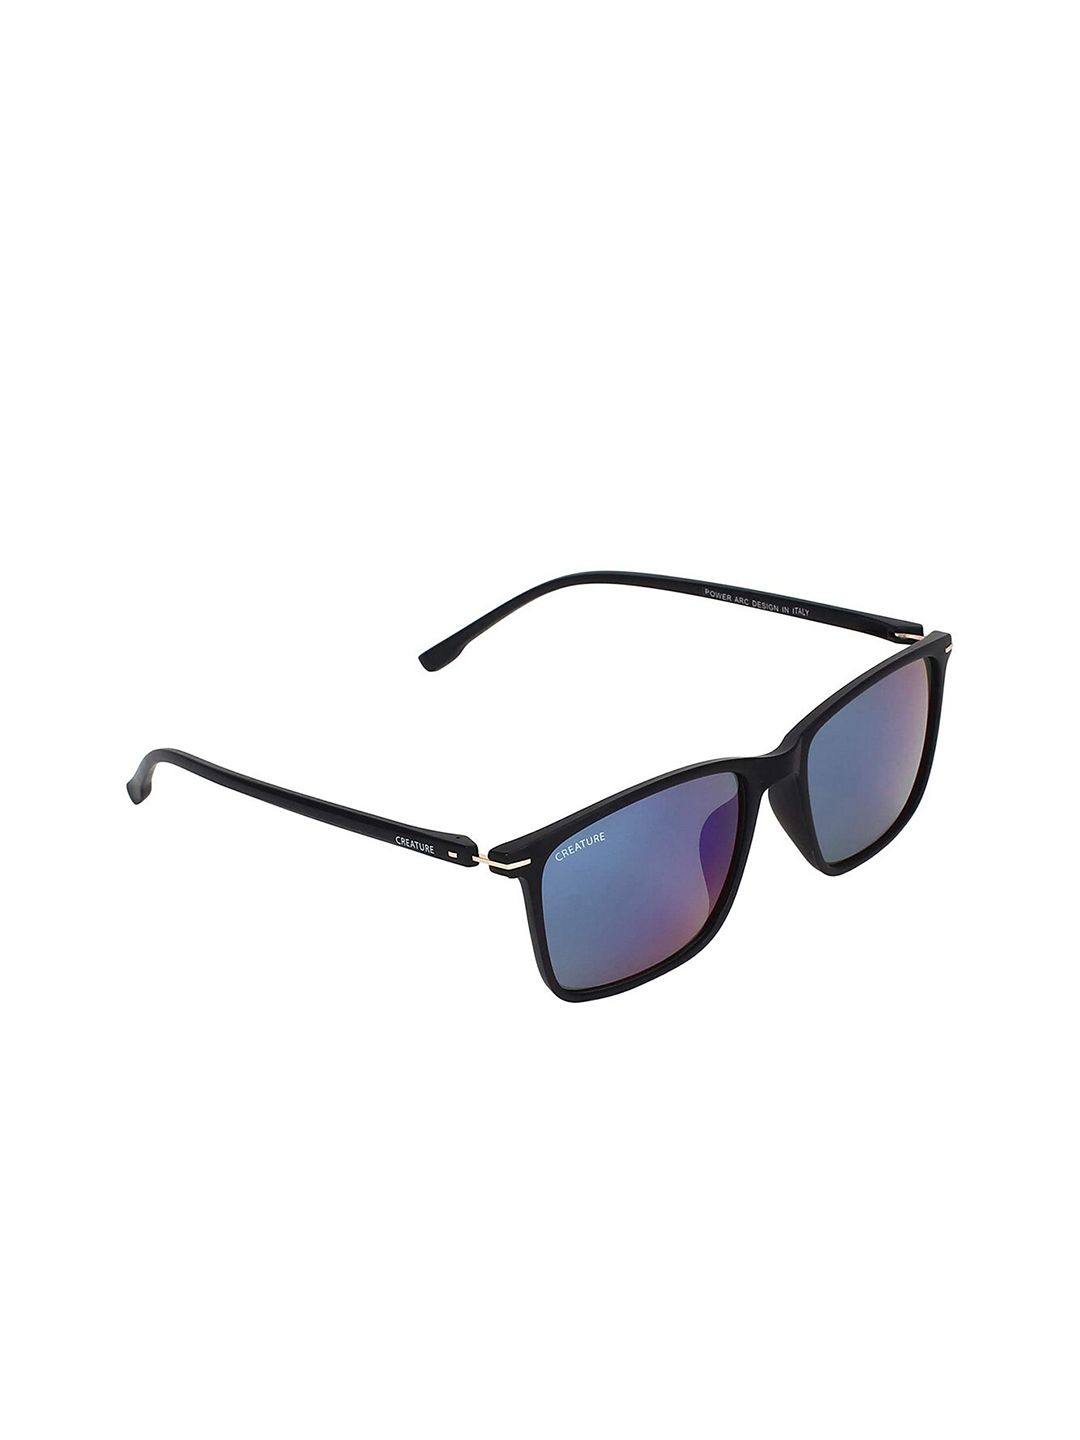 Creature Unisex Blue Lens & Black UV Protected Wayfarer Sunglasses PWRS-002 Price in India